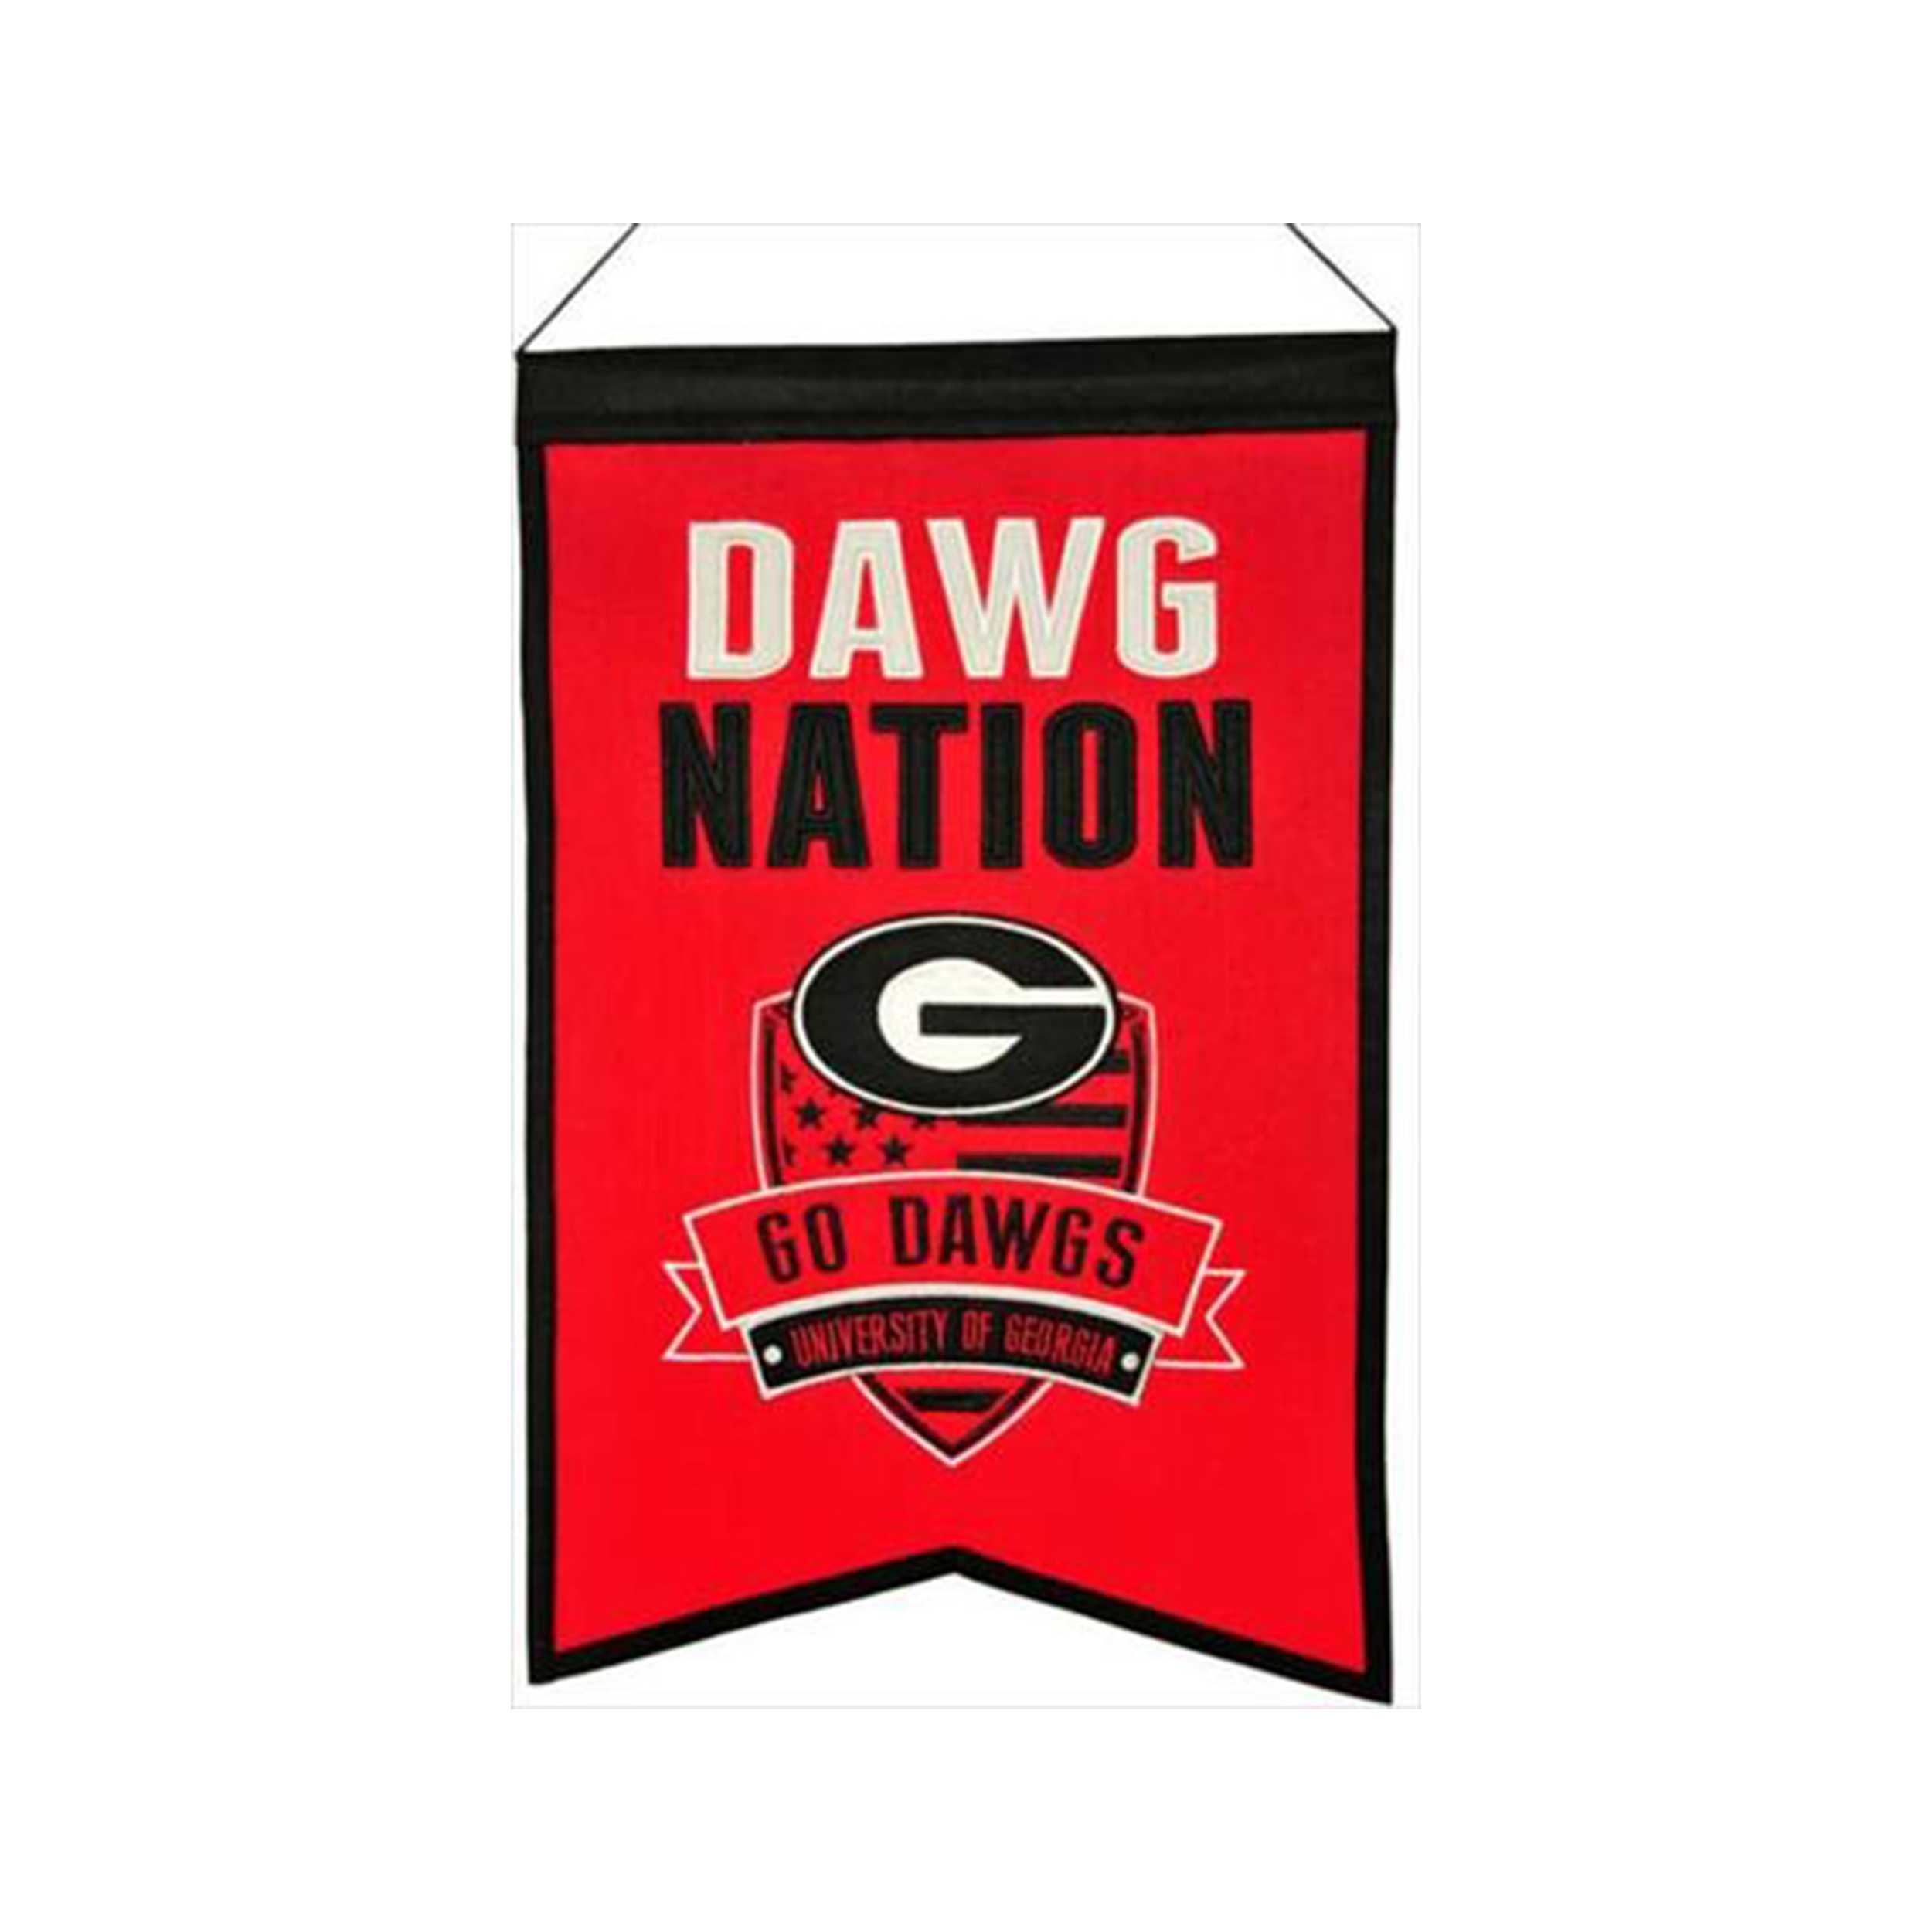 Georgia Bulldogs Nations Banner